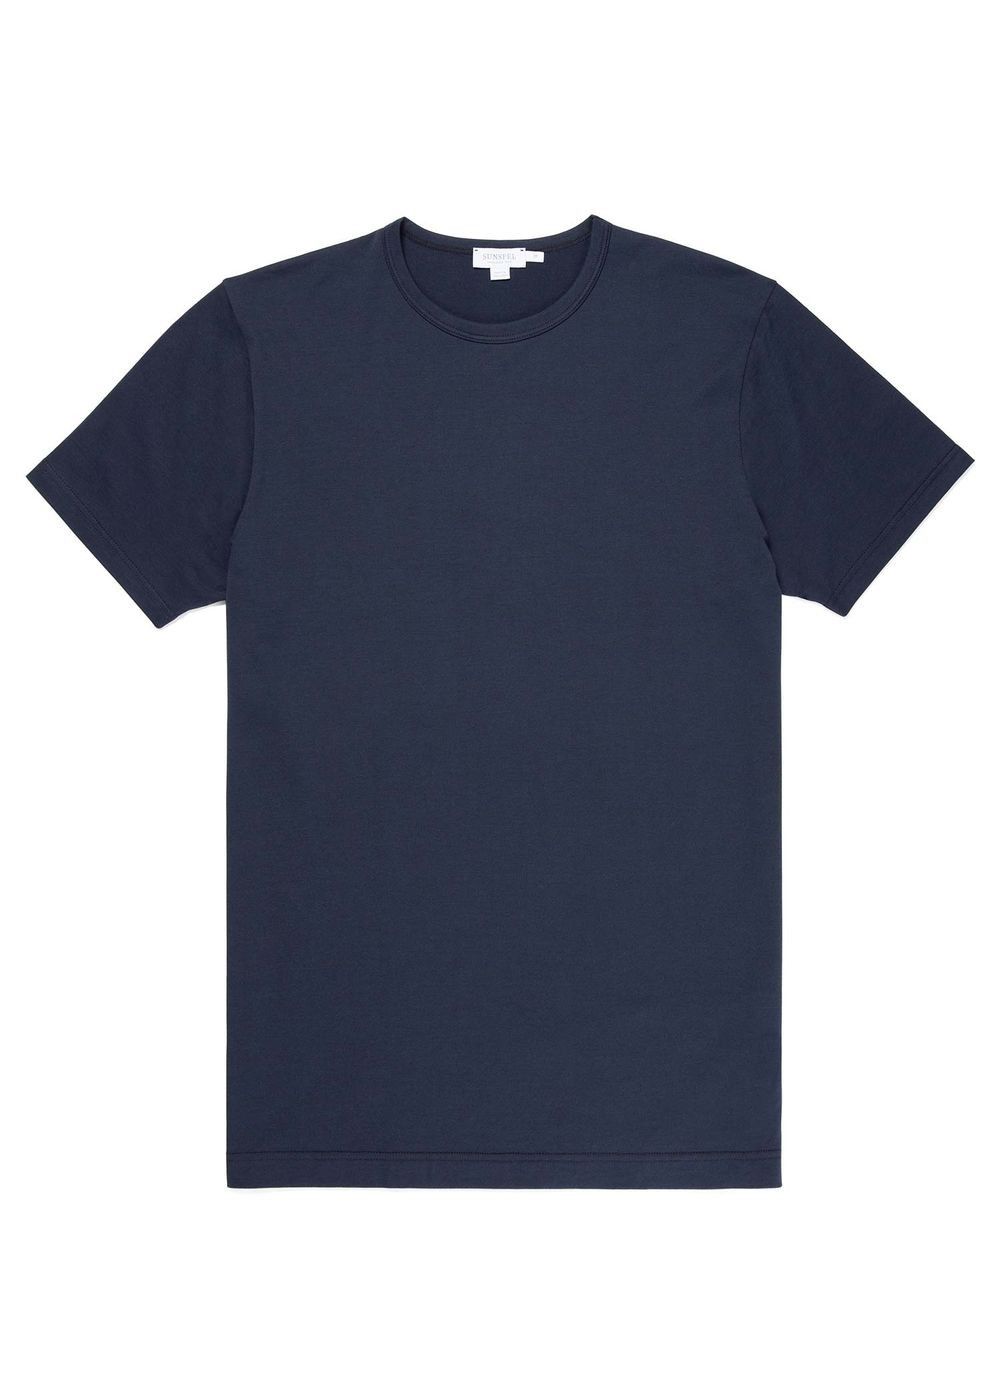 Sunspel Men's Classic Cotton T-Shirt in Navy